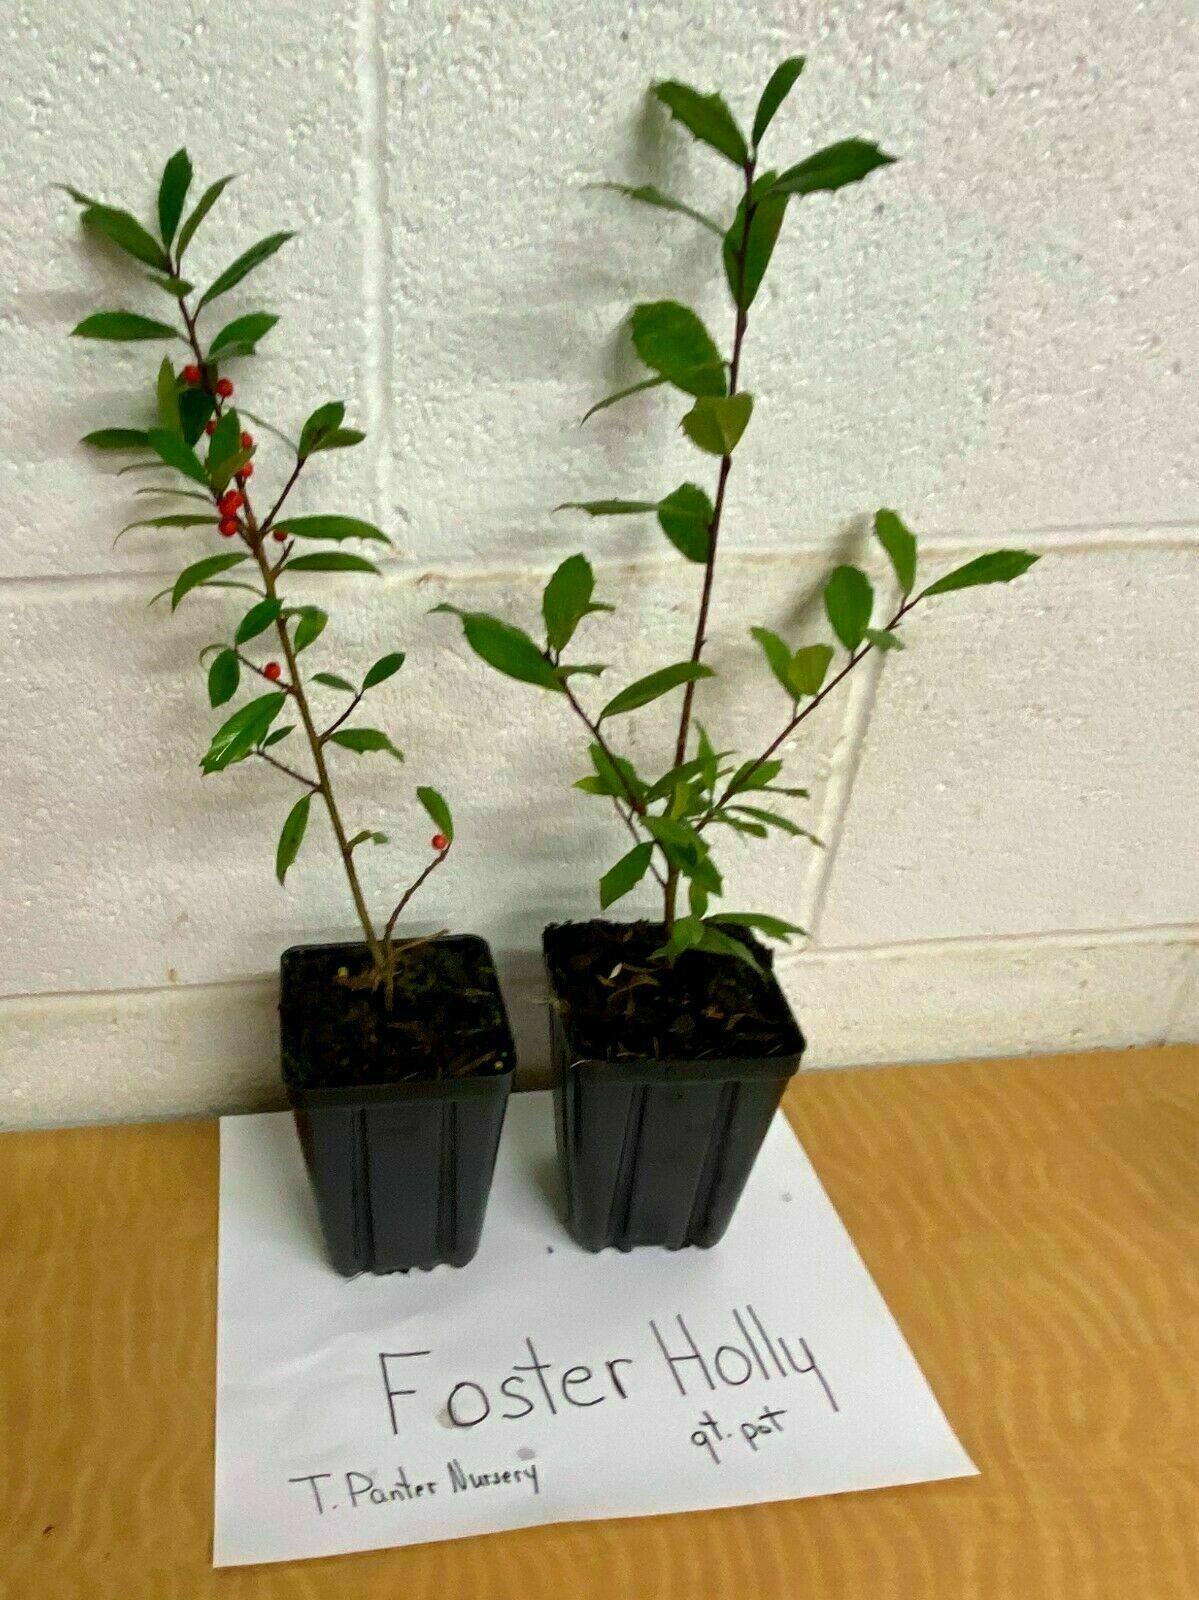 2 Foster Holly Tree/Shrubs - Live Plants - 6-12" Tall Seedlings - Quart Pots - The Nursery Center